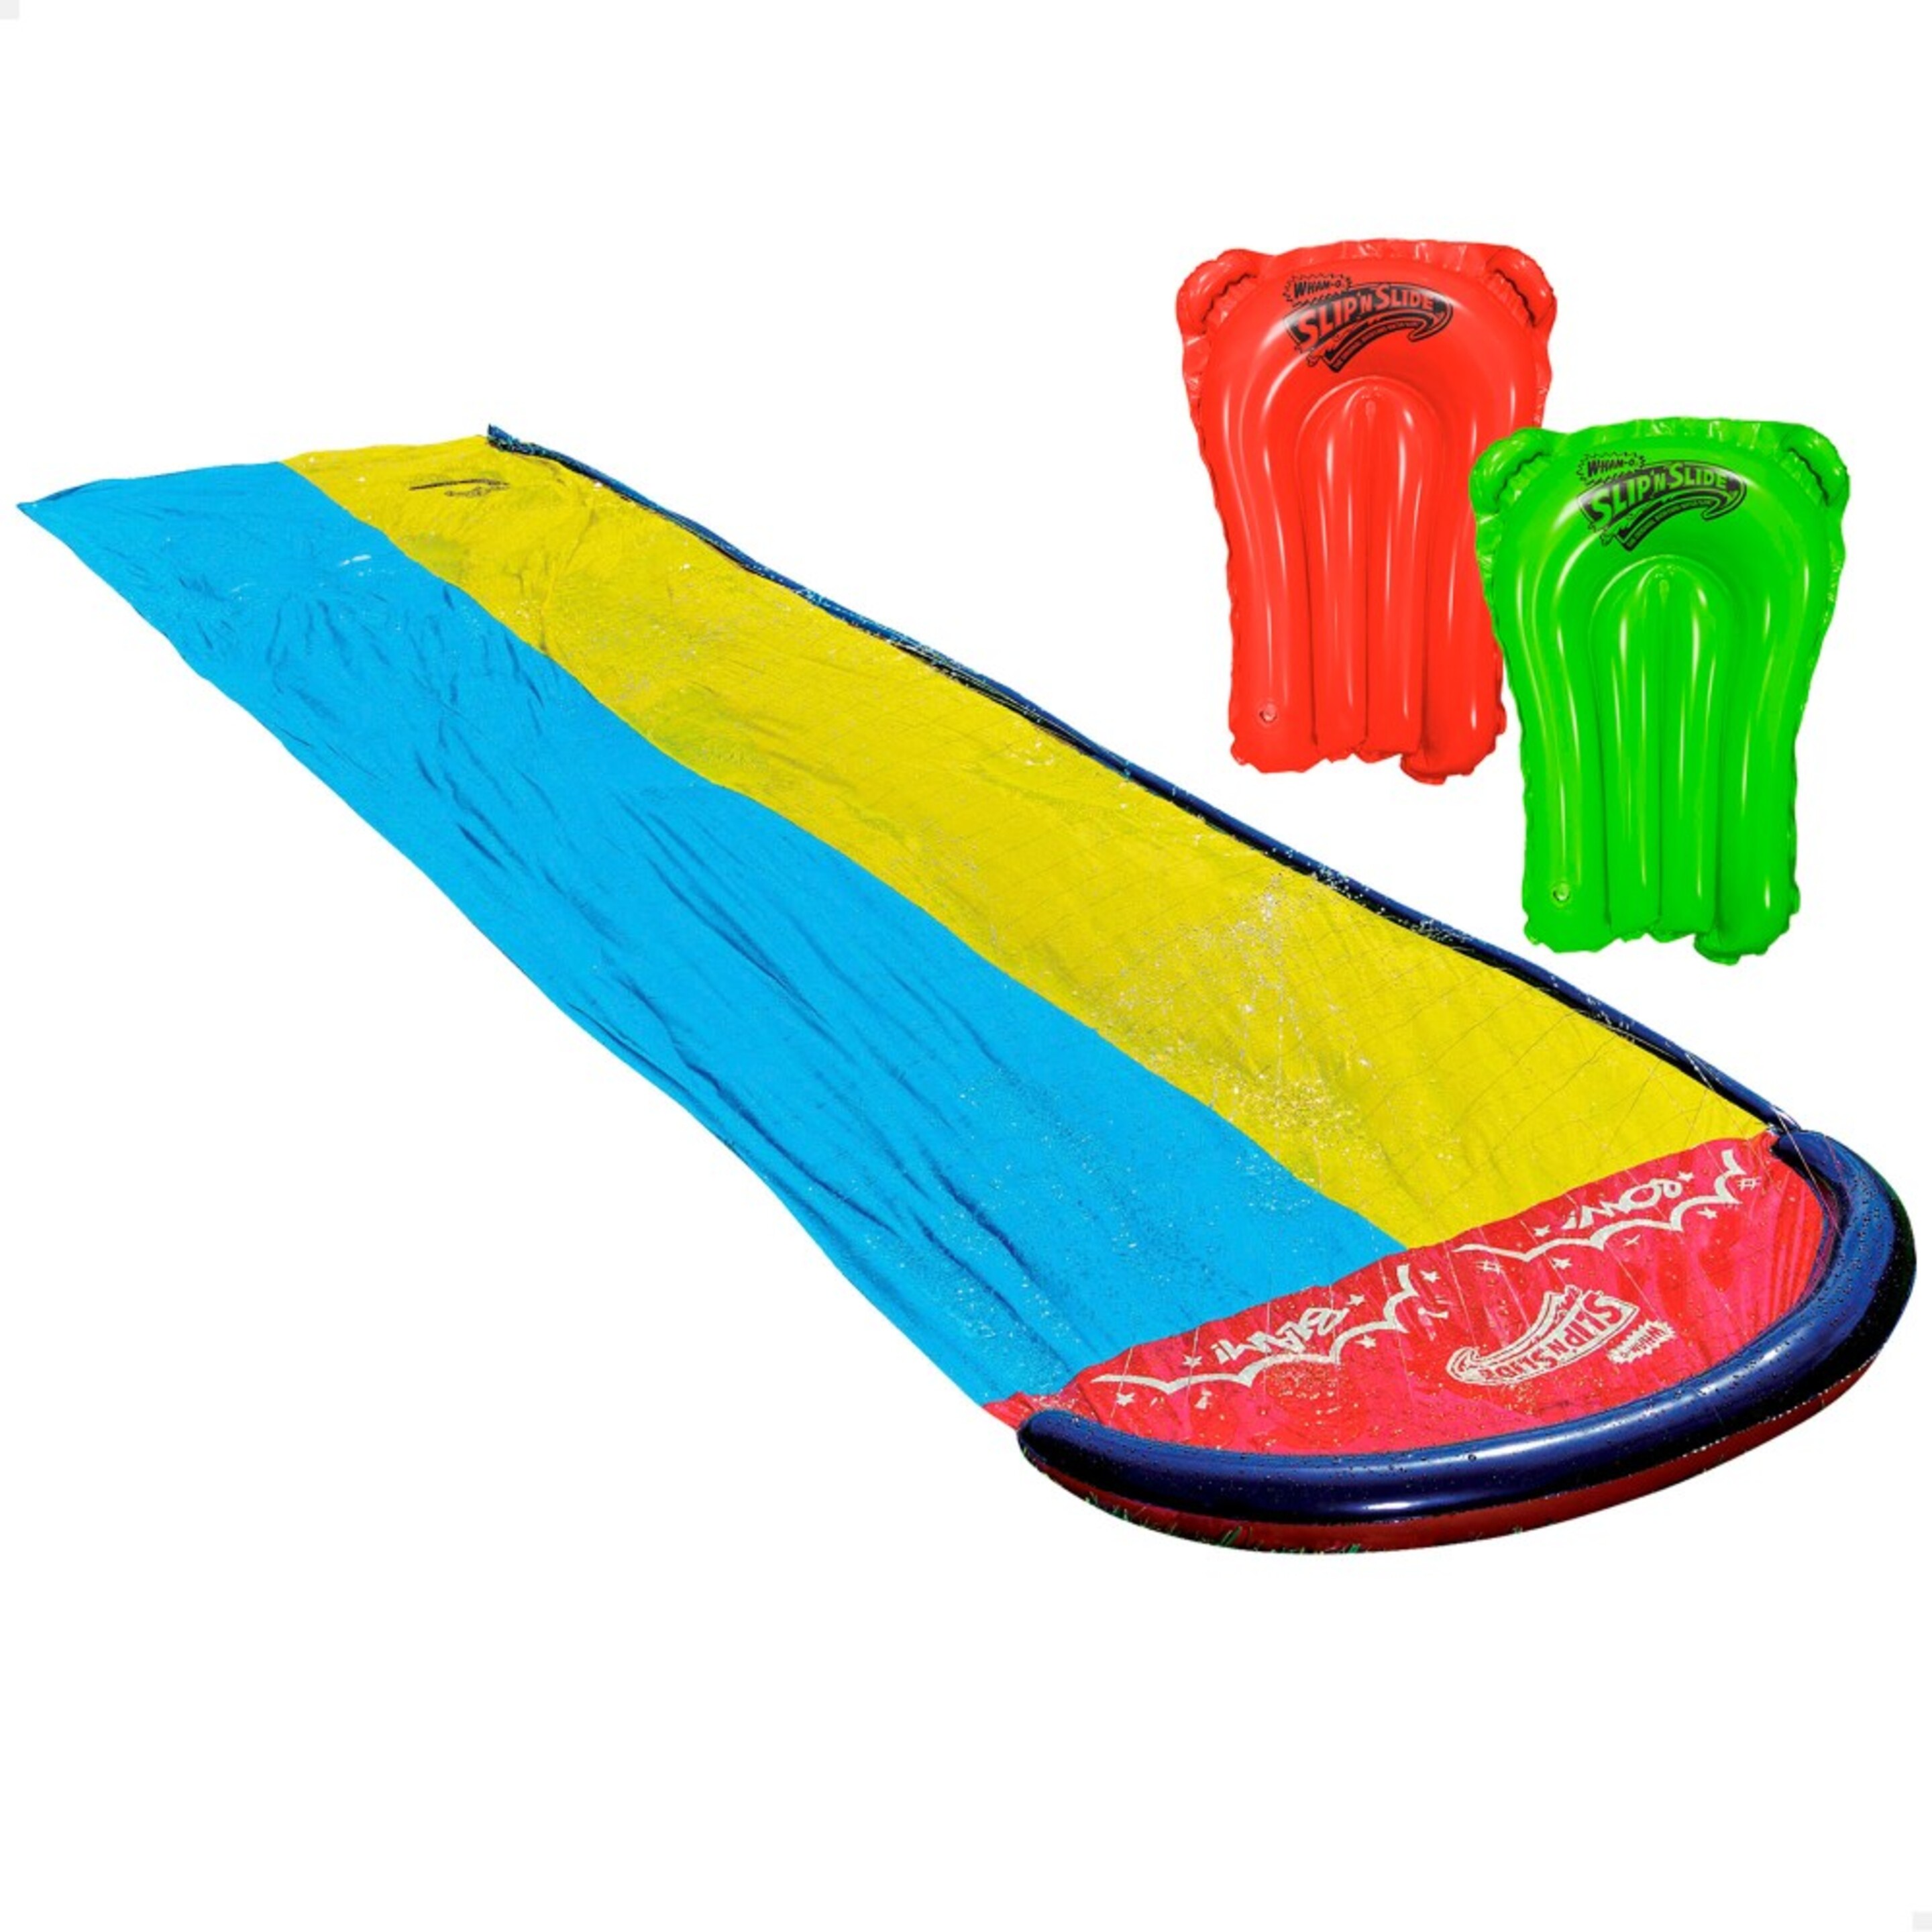 Slip ‘n Slide Pista Deslizante Agua C/2 Tablas De Surf - Multicolor  MKP